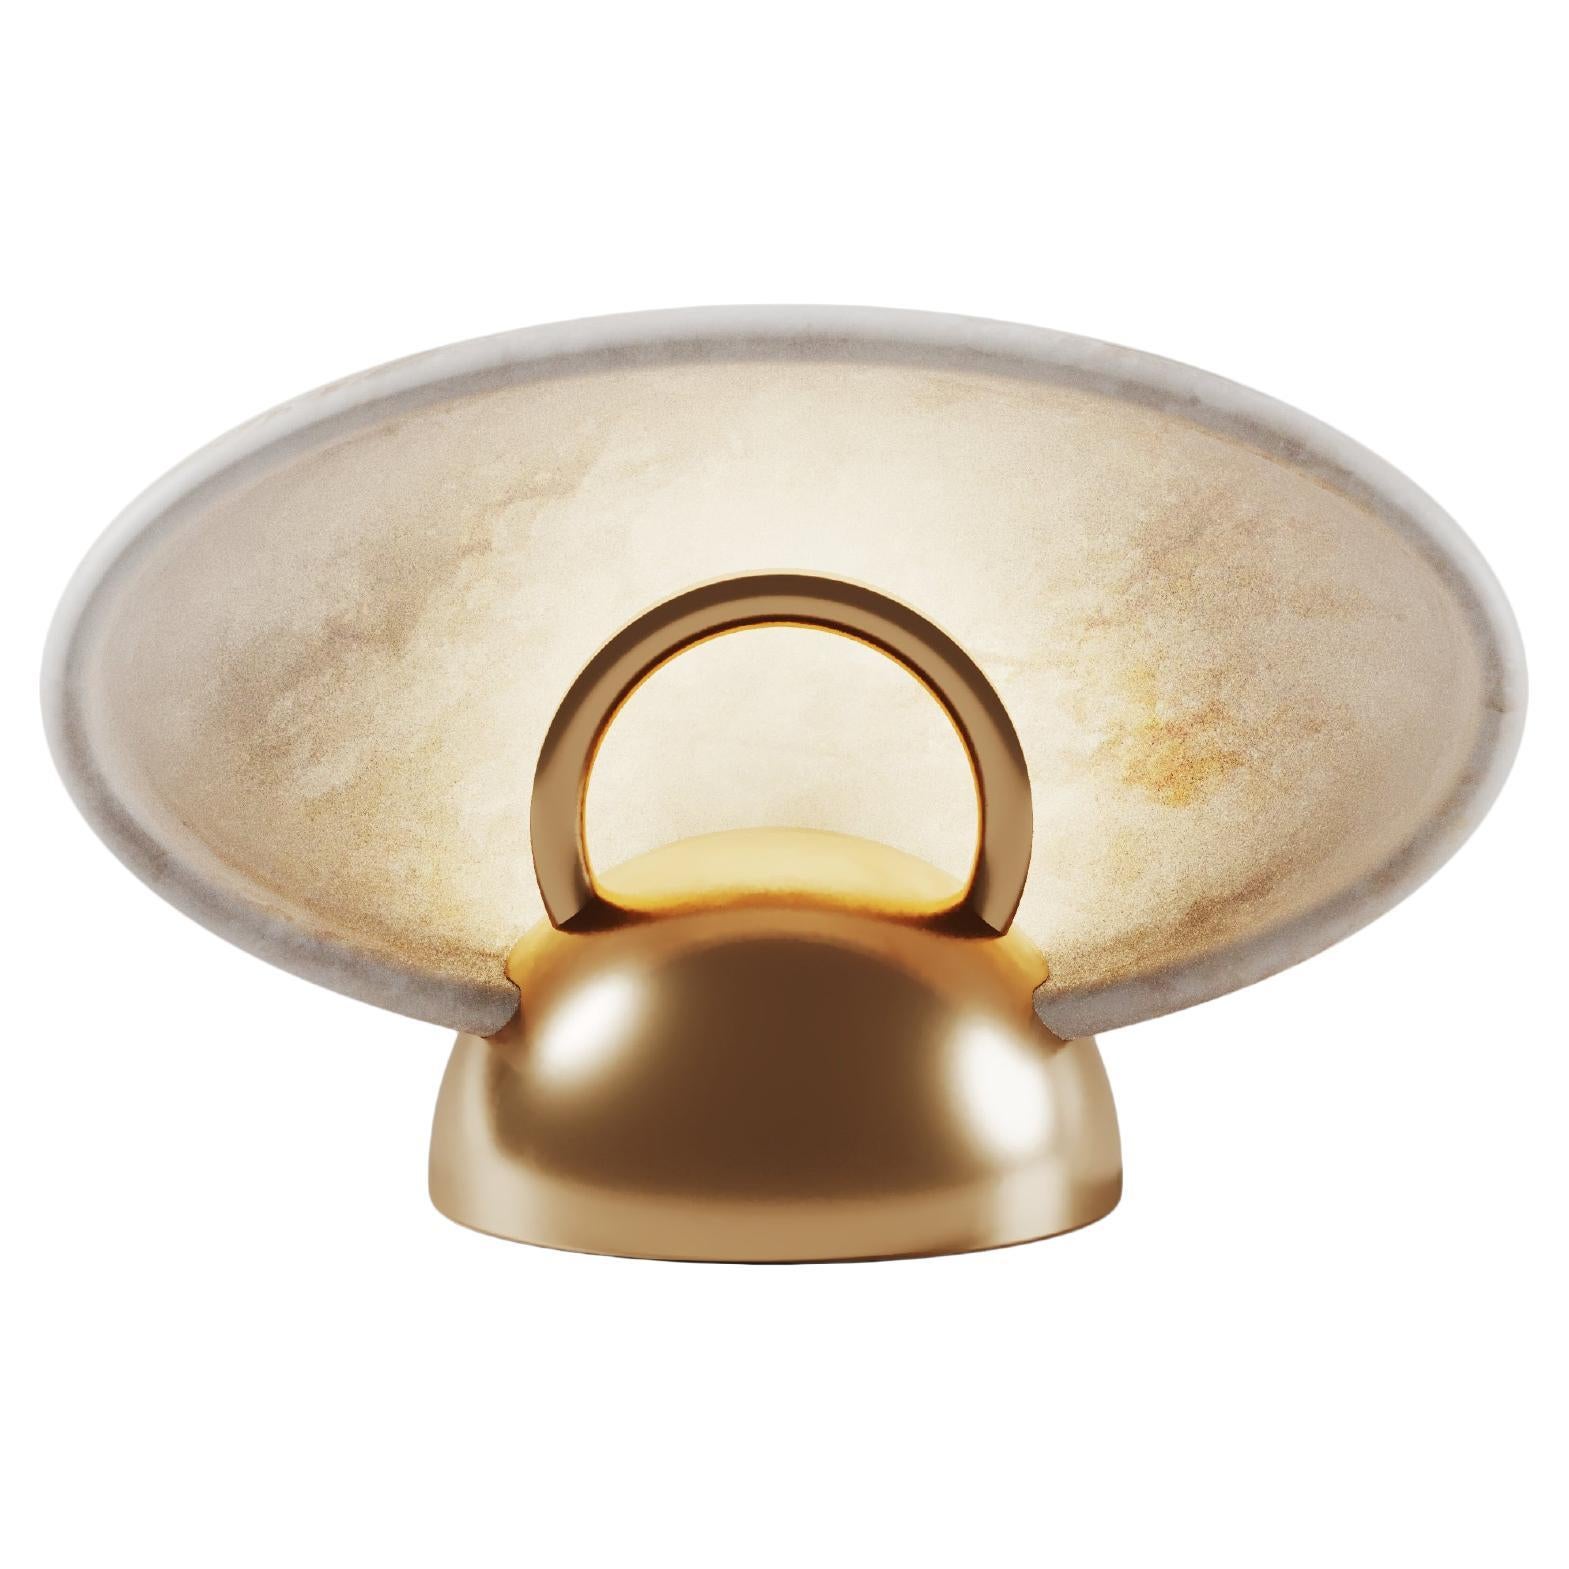 21st Marais i Table Lamp Brass Alabaster by Creativemary